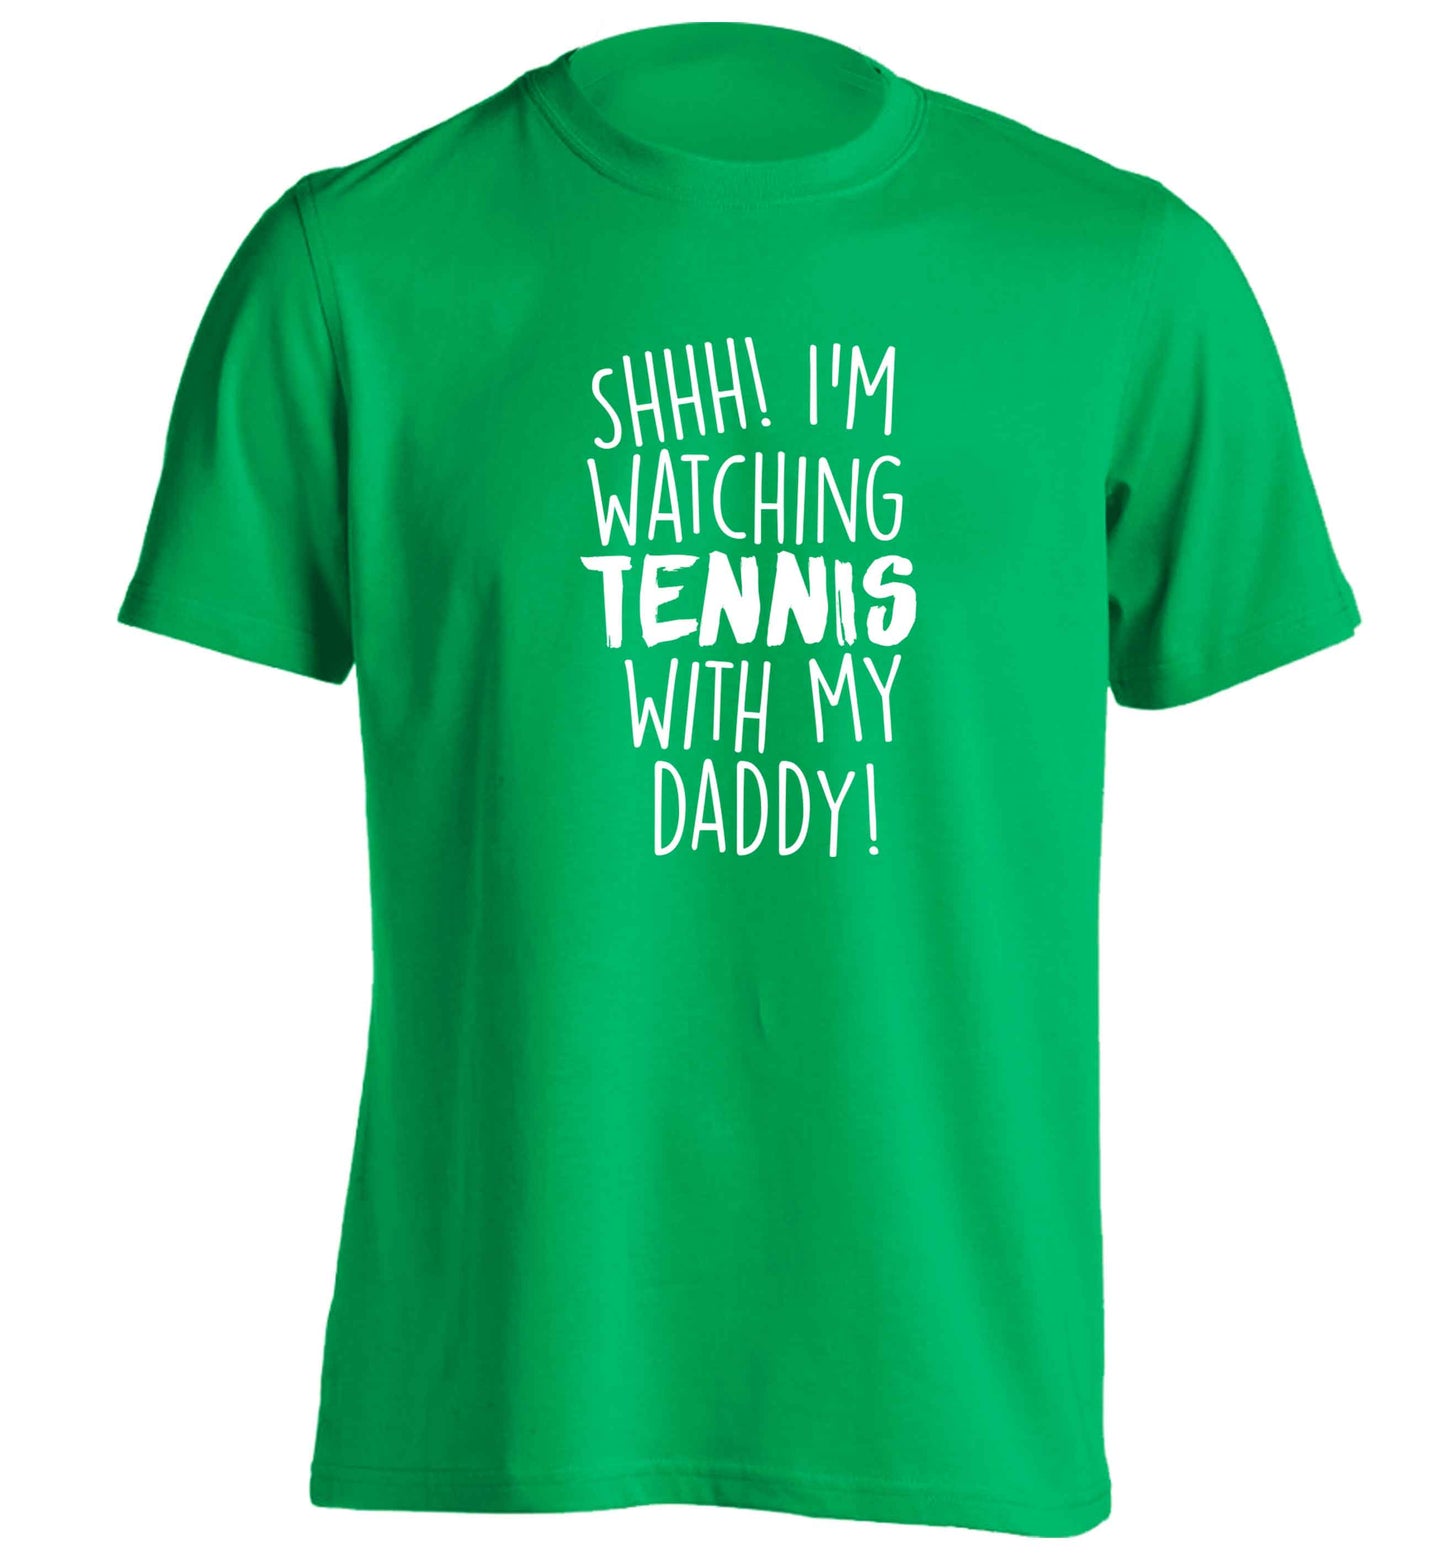 Shh! I'm watching tennis with my daddy! adults unisex green Tshirt 2XL